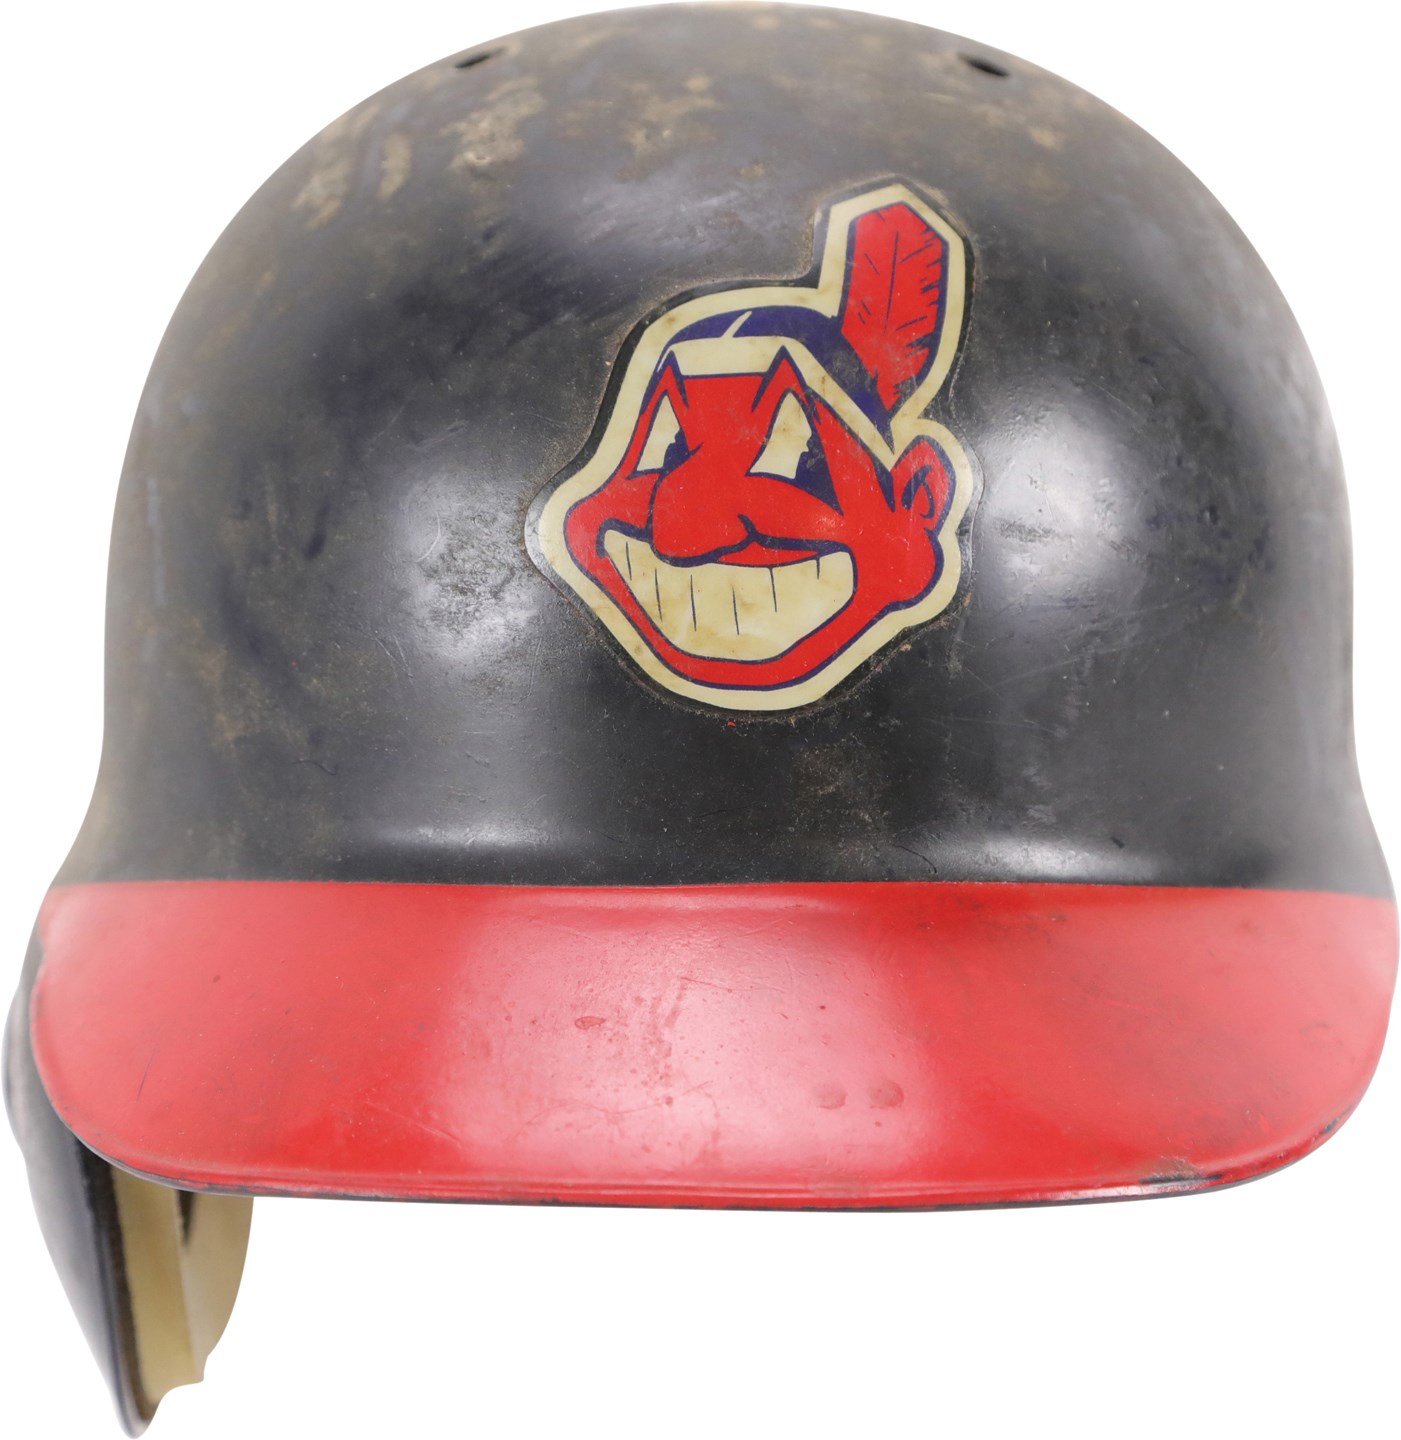 Baseball Equipment - Jim Thome Cleveland Indians Rookie Era Game Used Batting Helmet